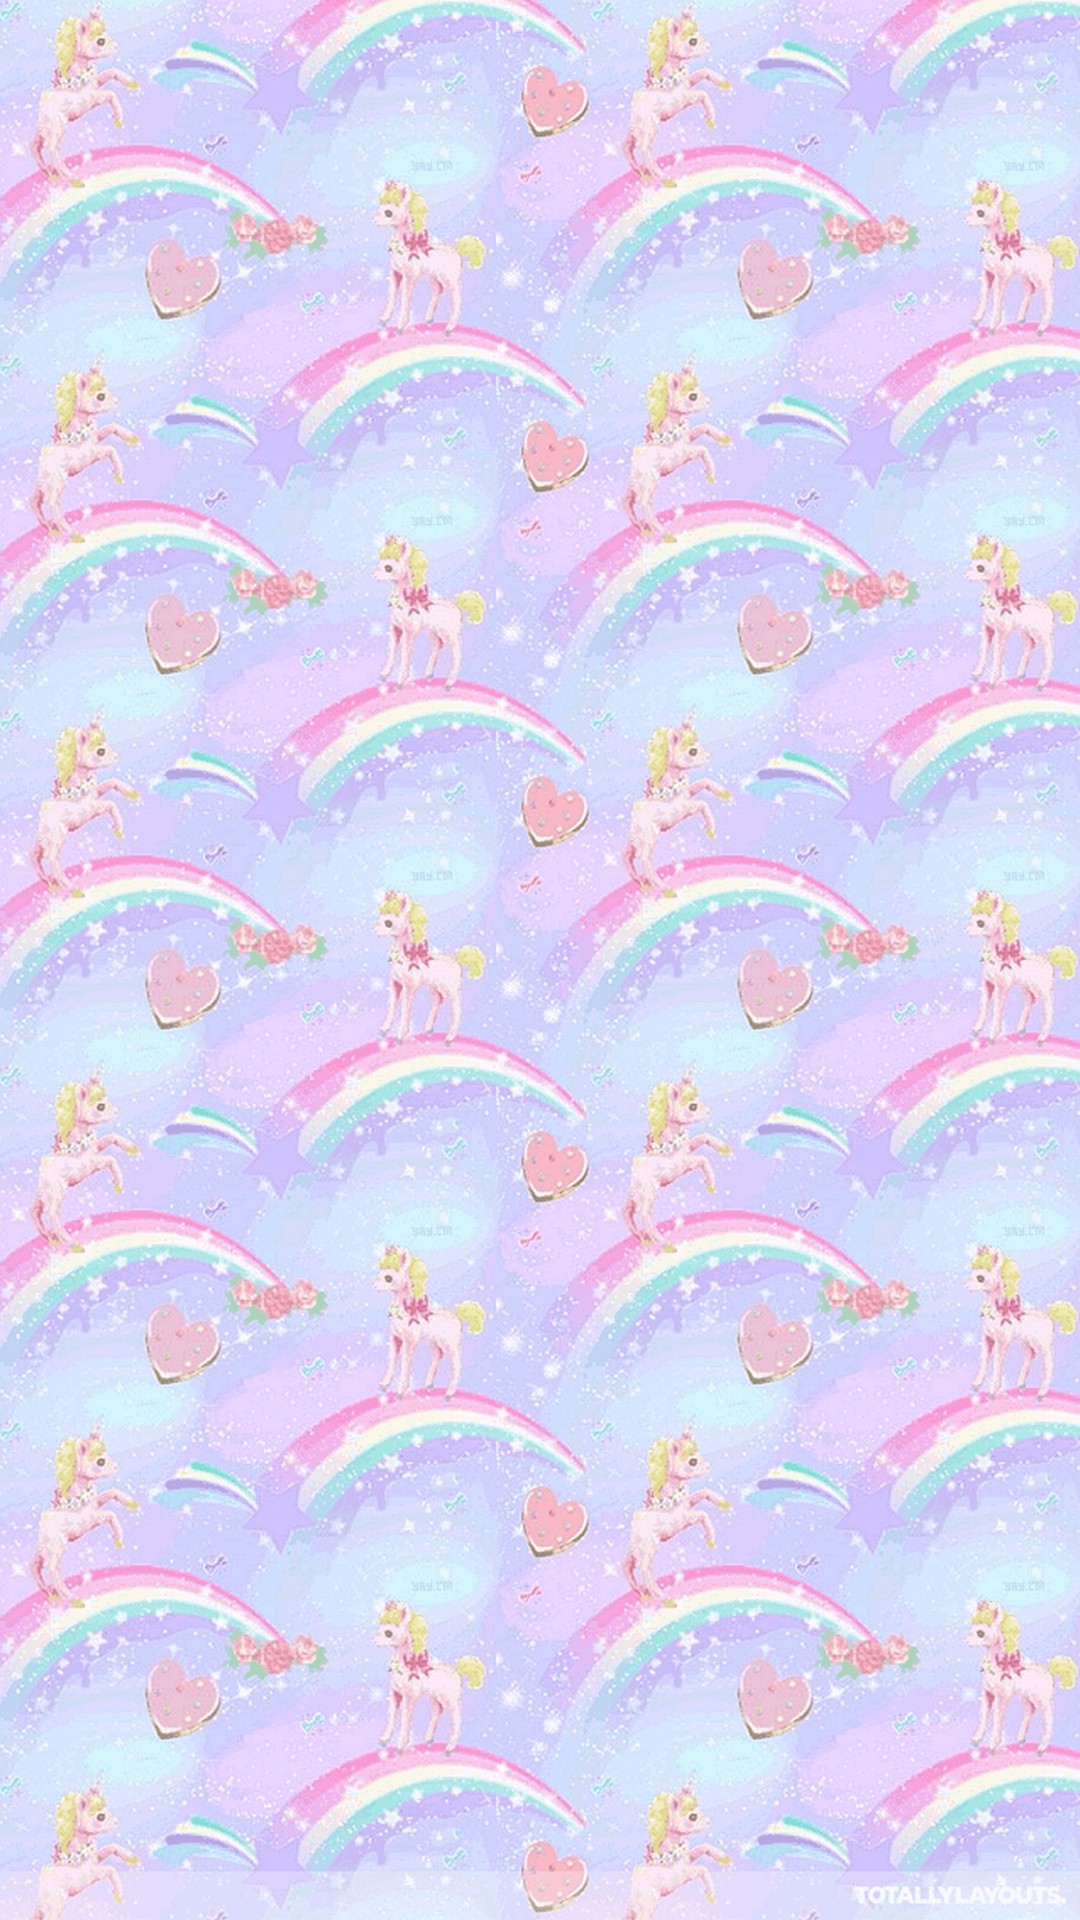 Cute Girly Unicorn Iphone Home Screen Wallpaper 2020 Cute Iphone